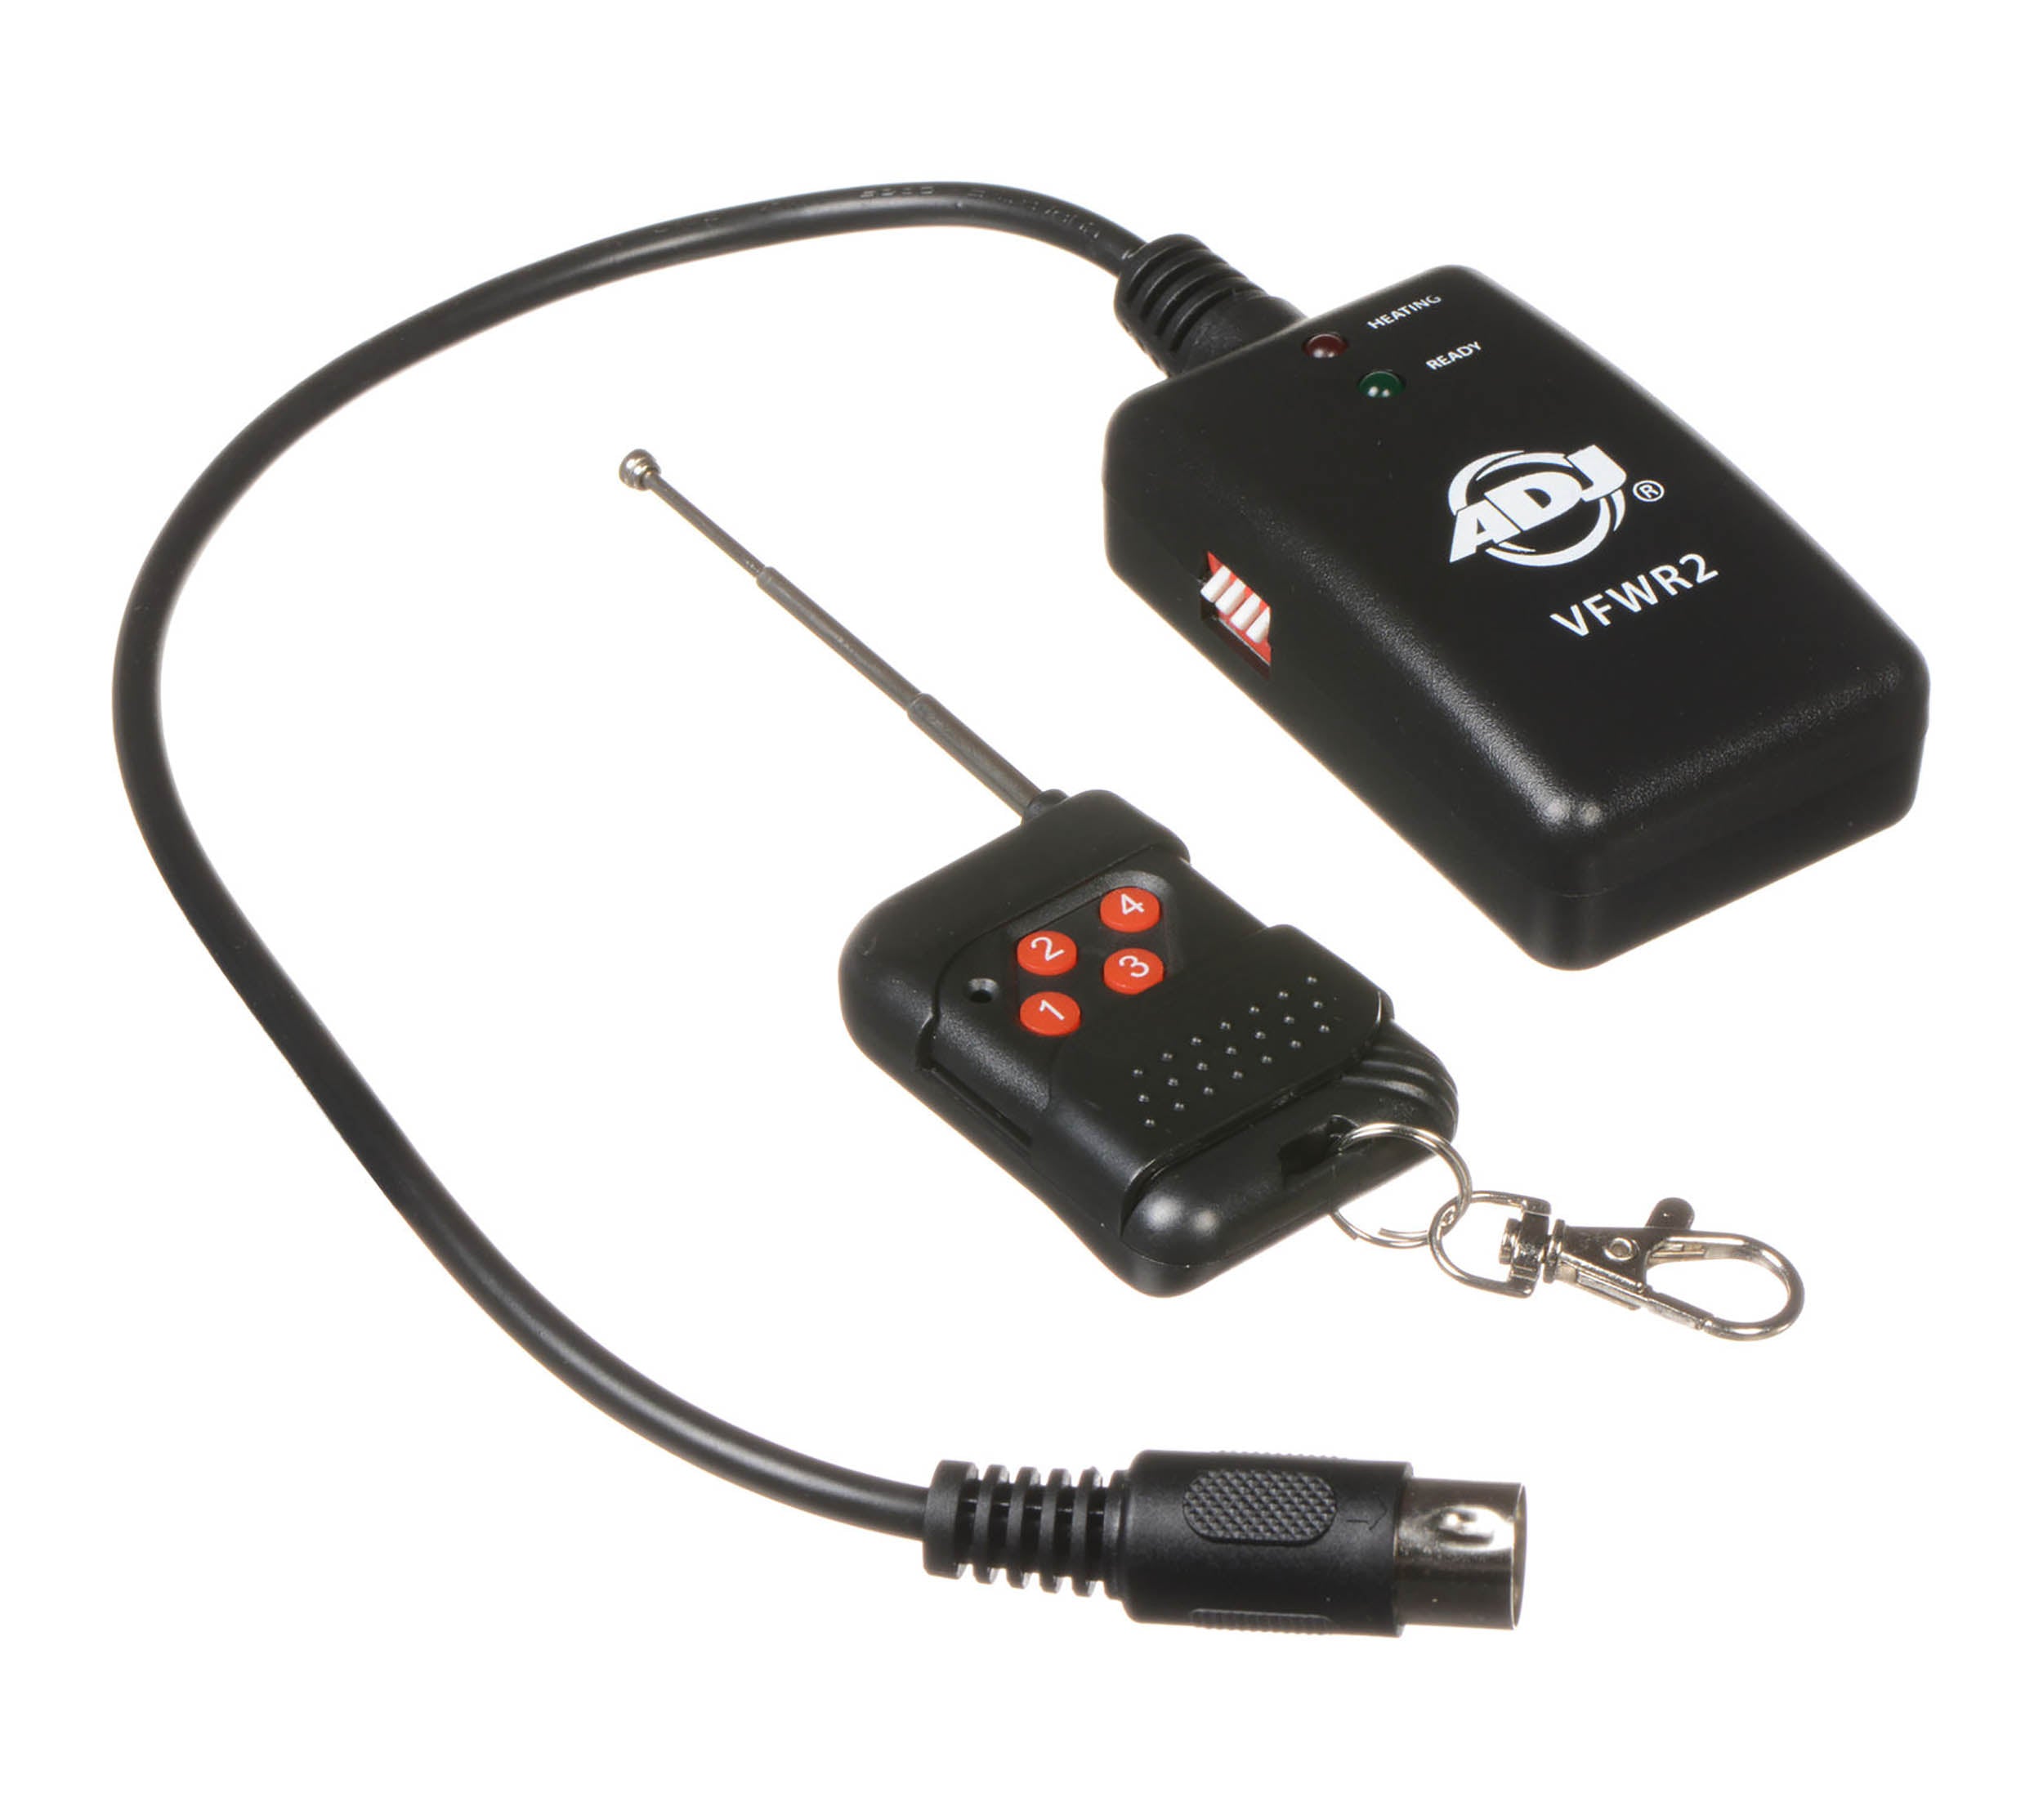 ADJ VFWR2, Wireless Remote for VF1300 and VF1600 Fog Machines by ADJ